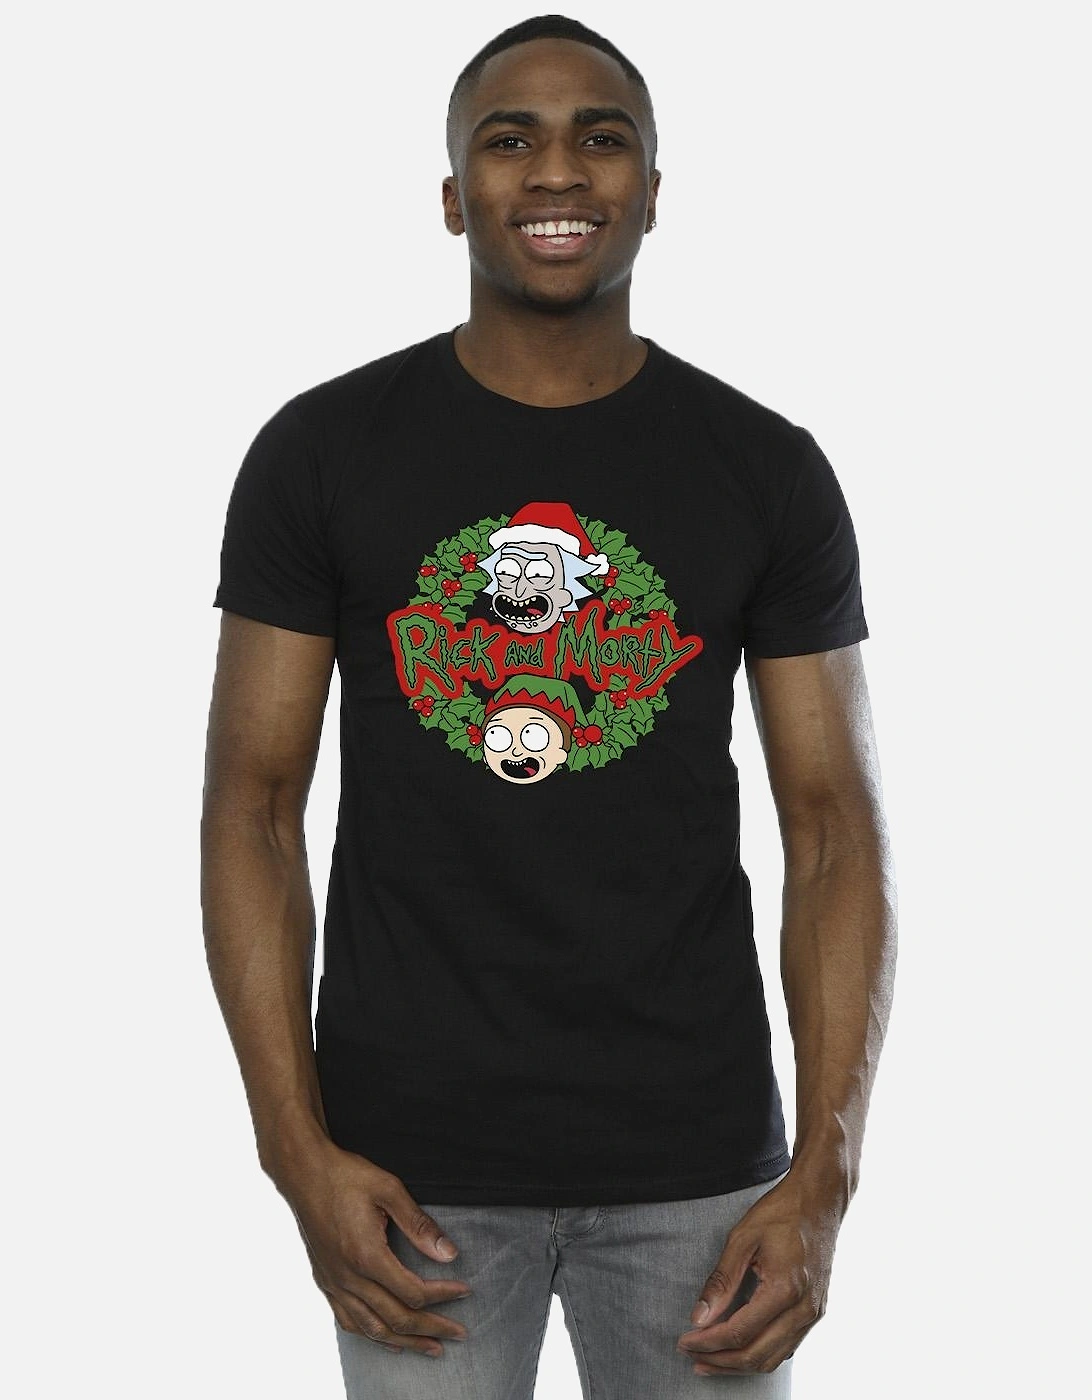 Mens Christmas Wreath T-Shirt